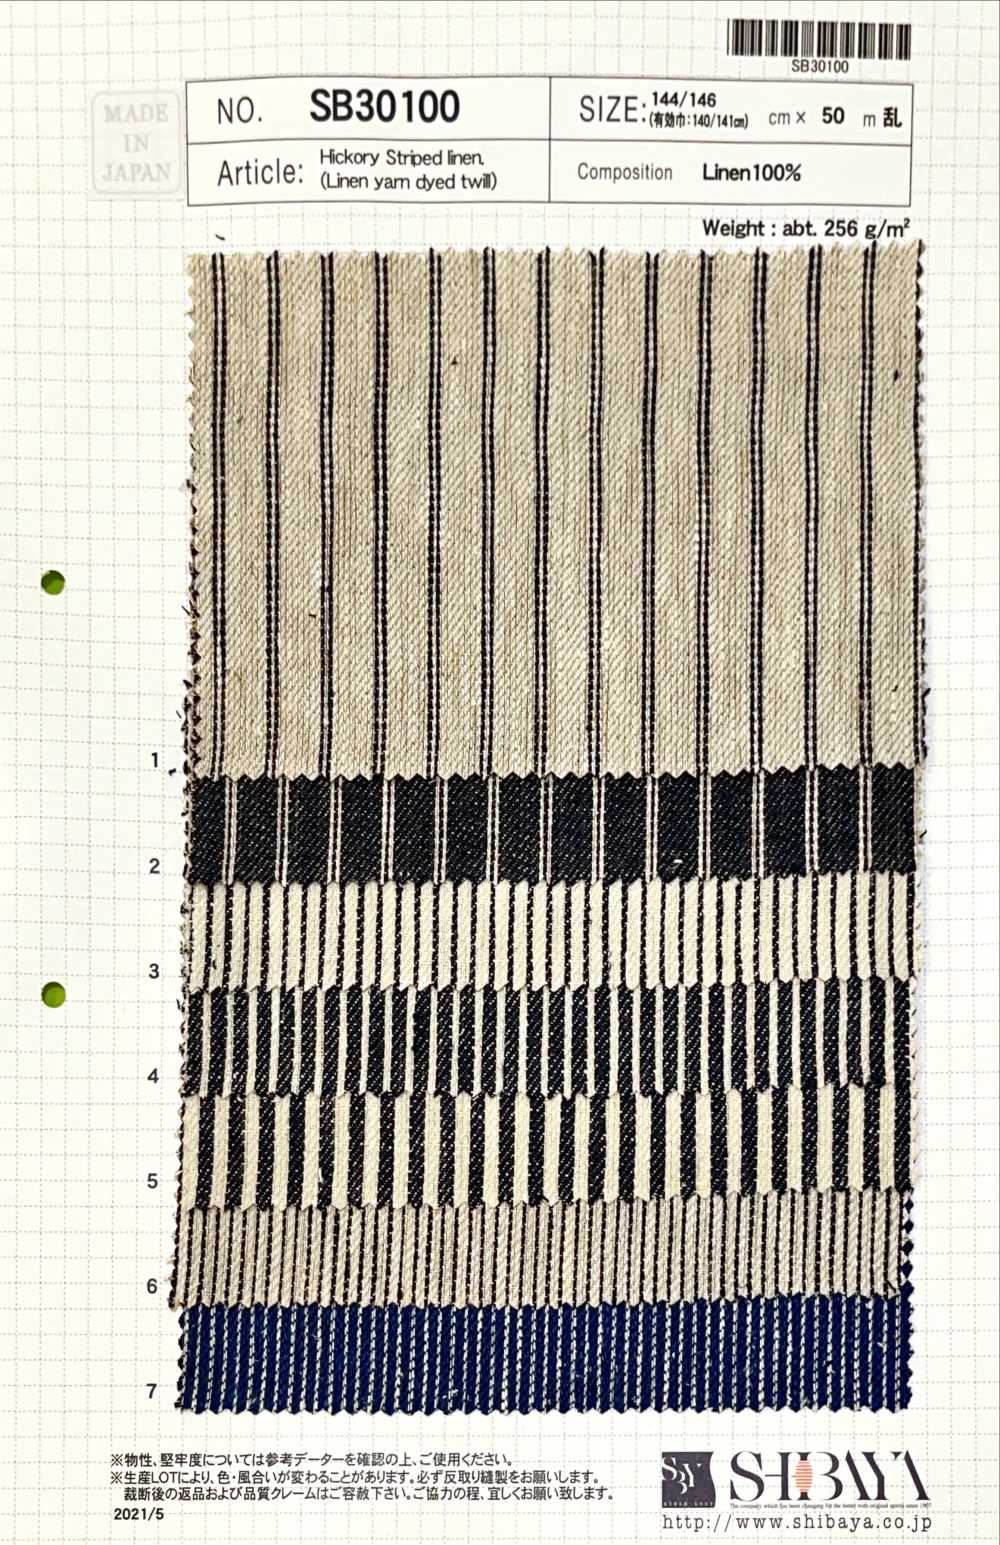 SB30100 Hickory Striped Linen[Têxtil / Tecido] SHIBAYA